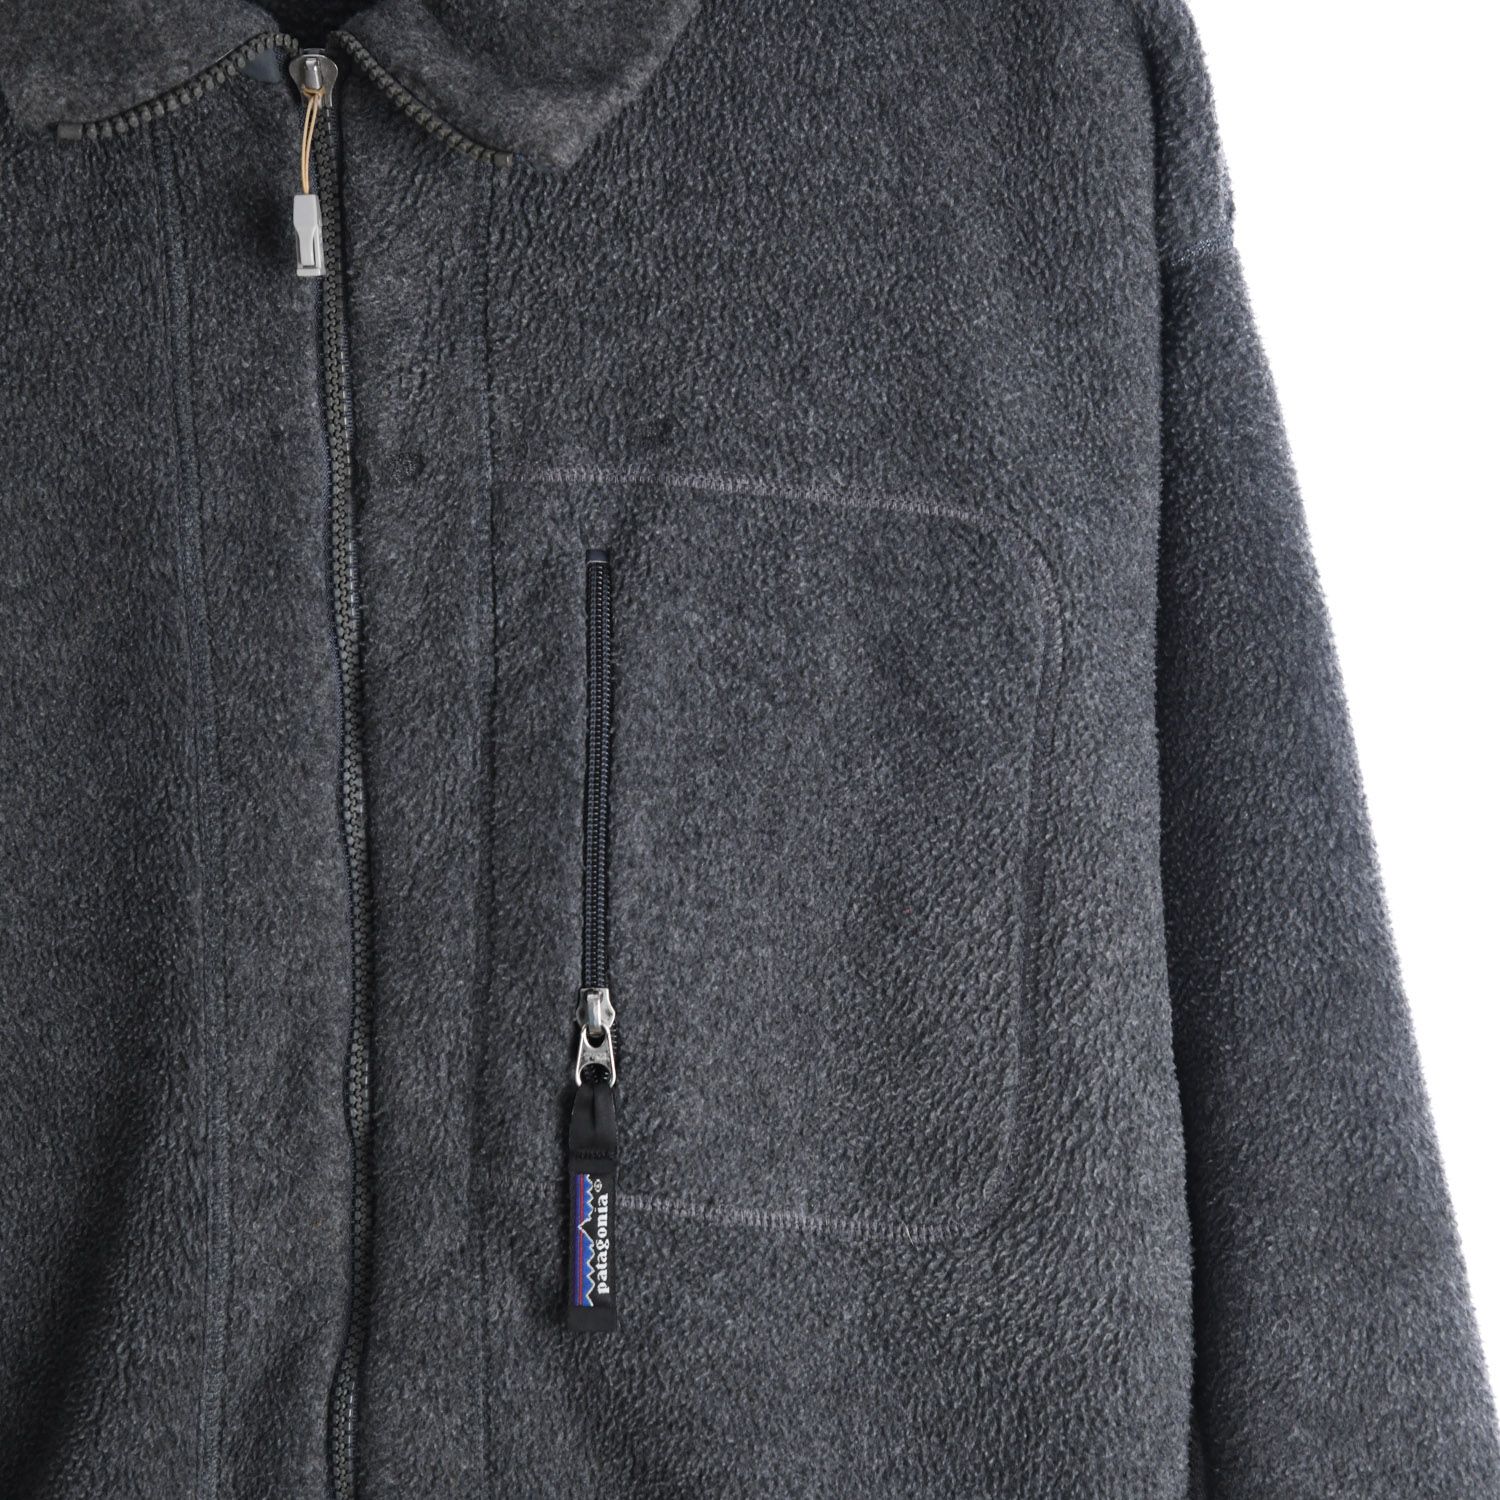 Patagiona 1990s Fleece Jacket